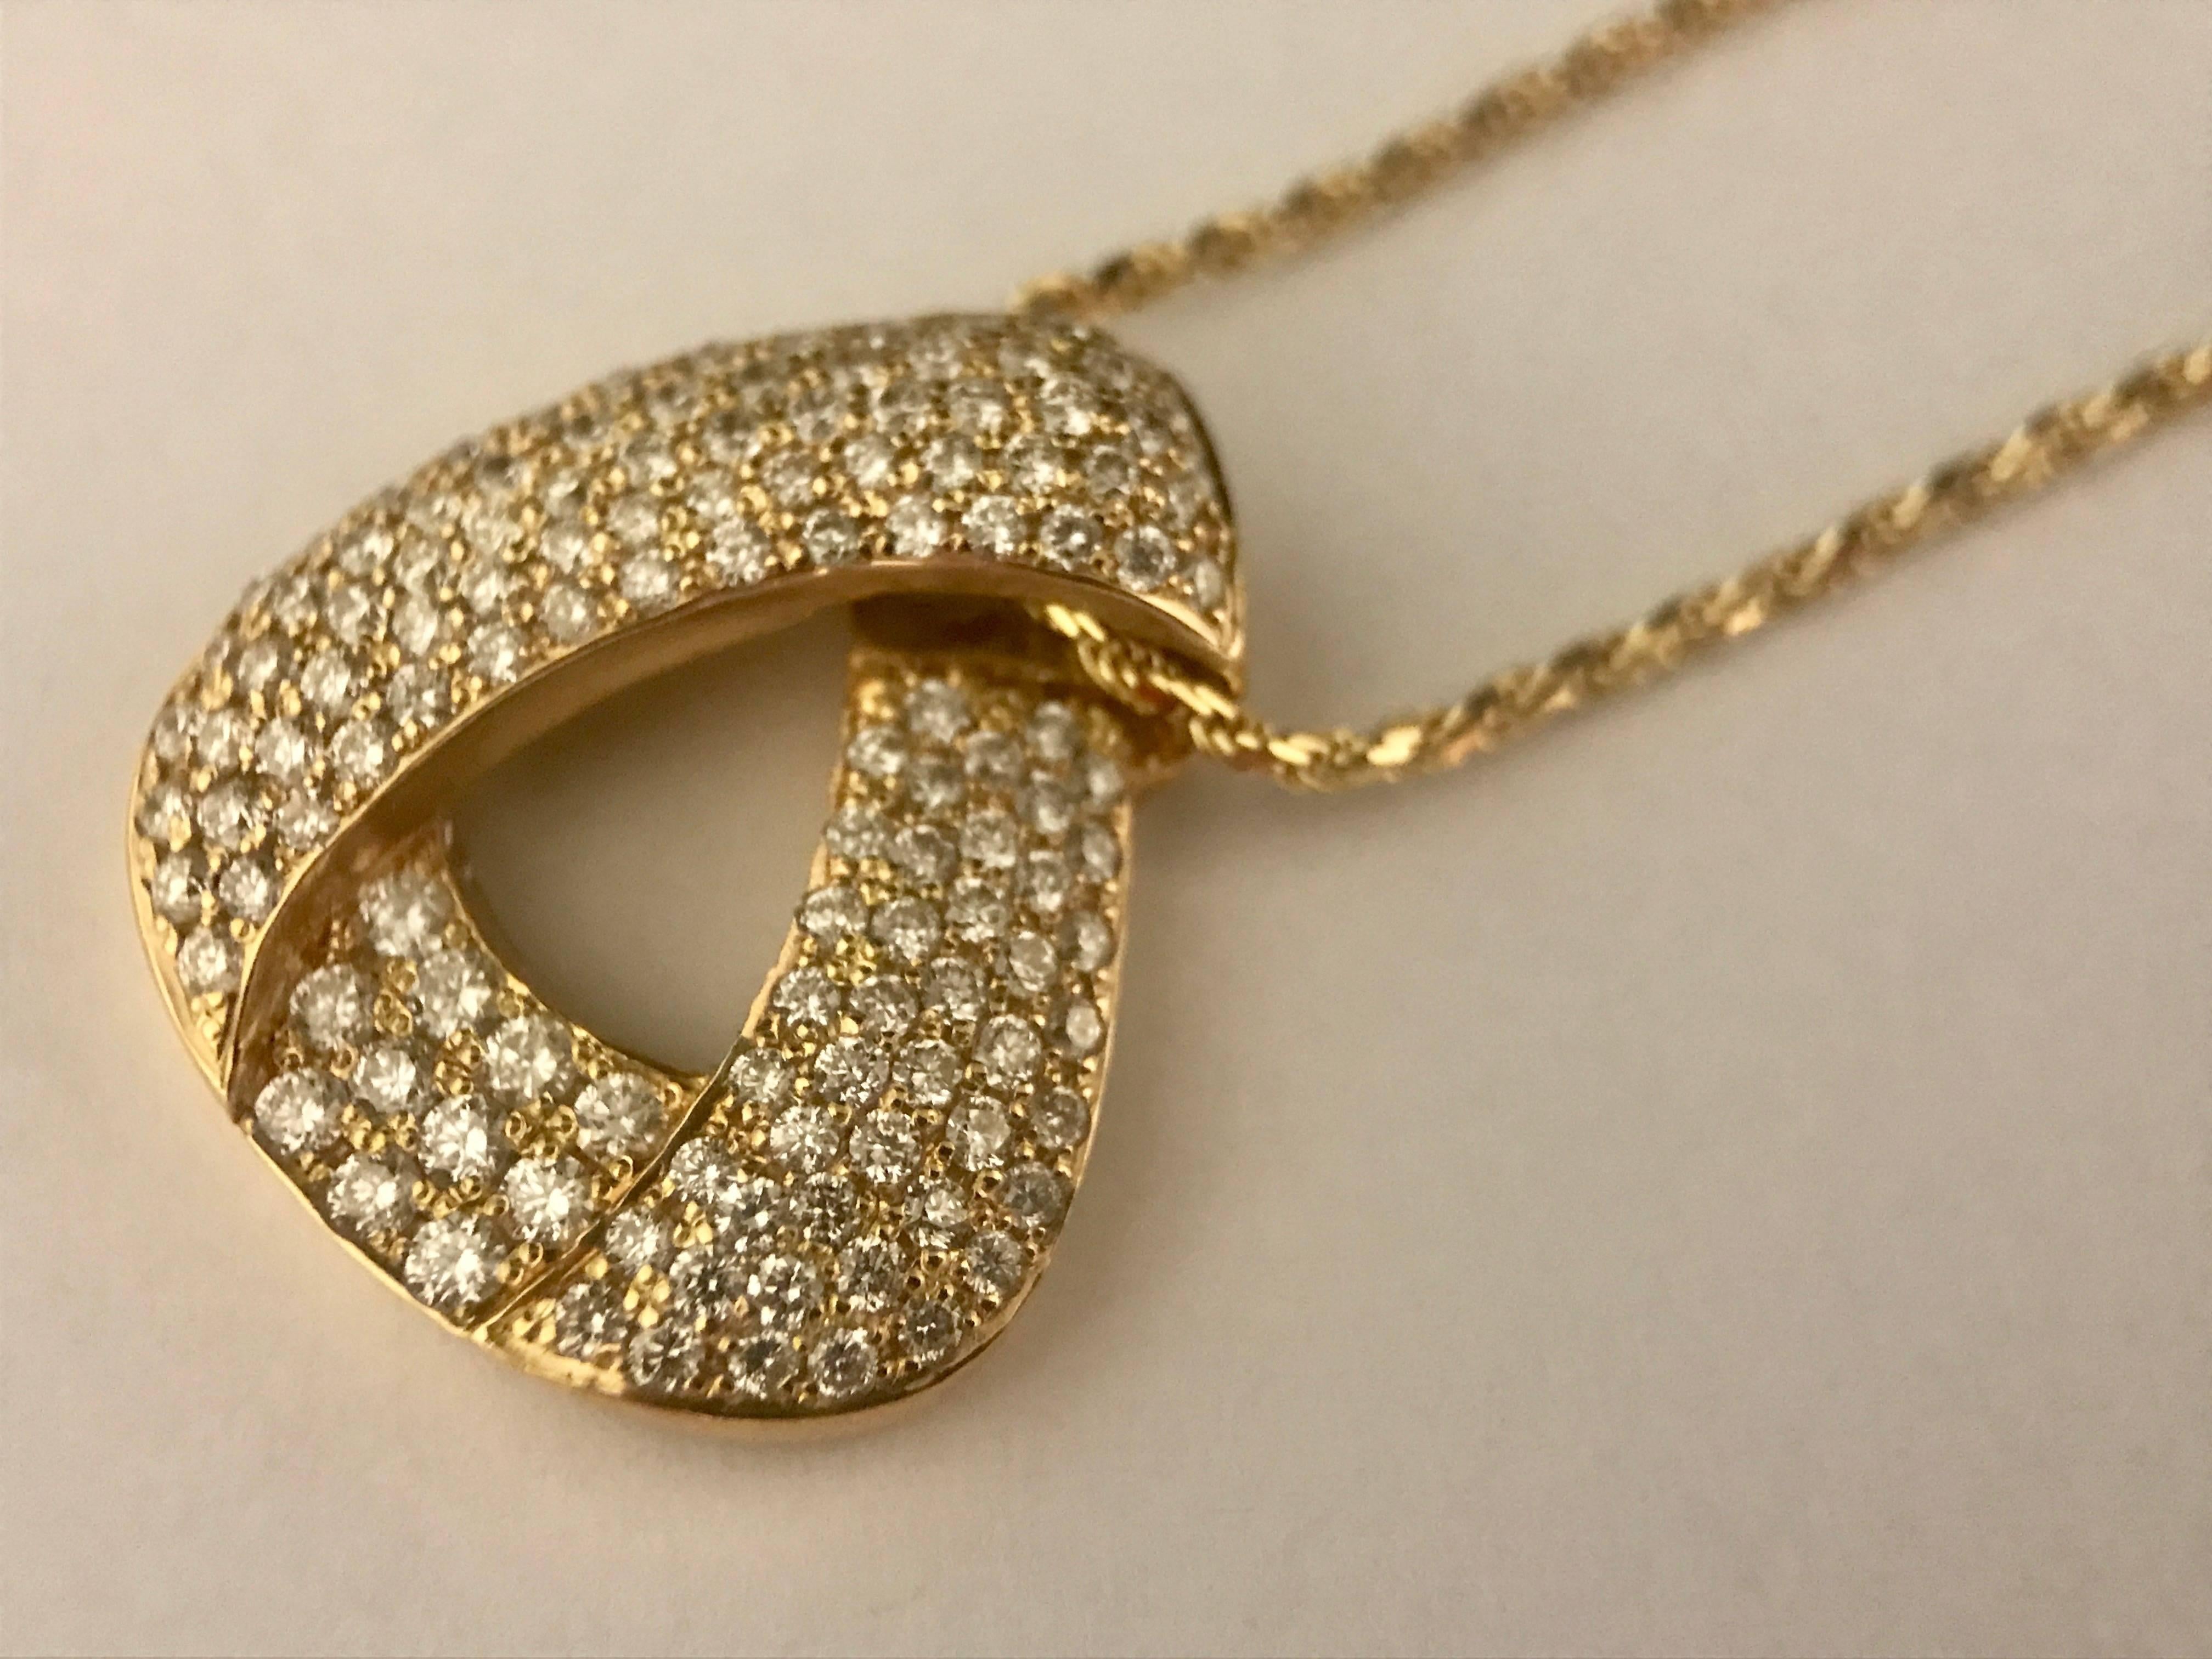 Brilliant Cut Diamonds and Yellow Gold Pendant Necklace